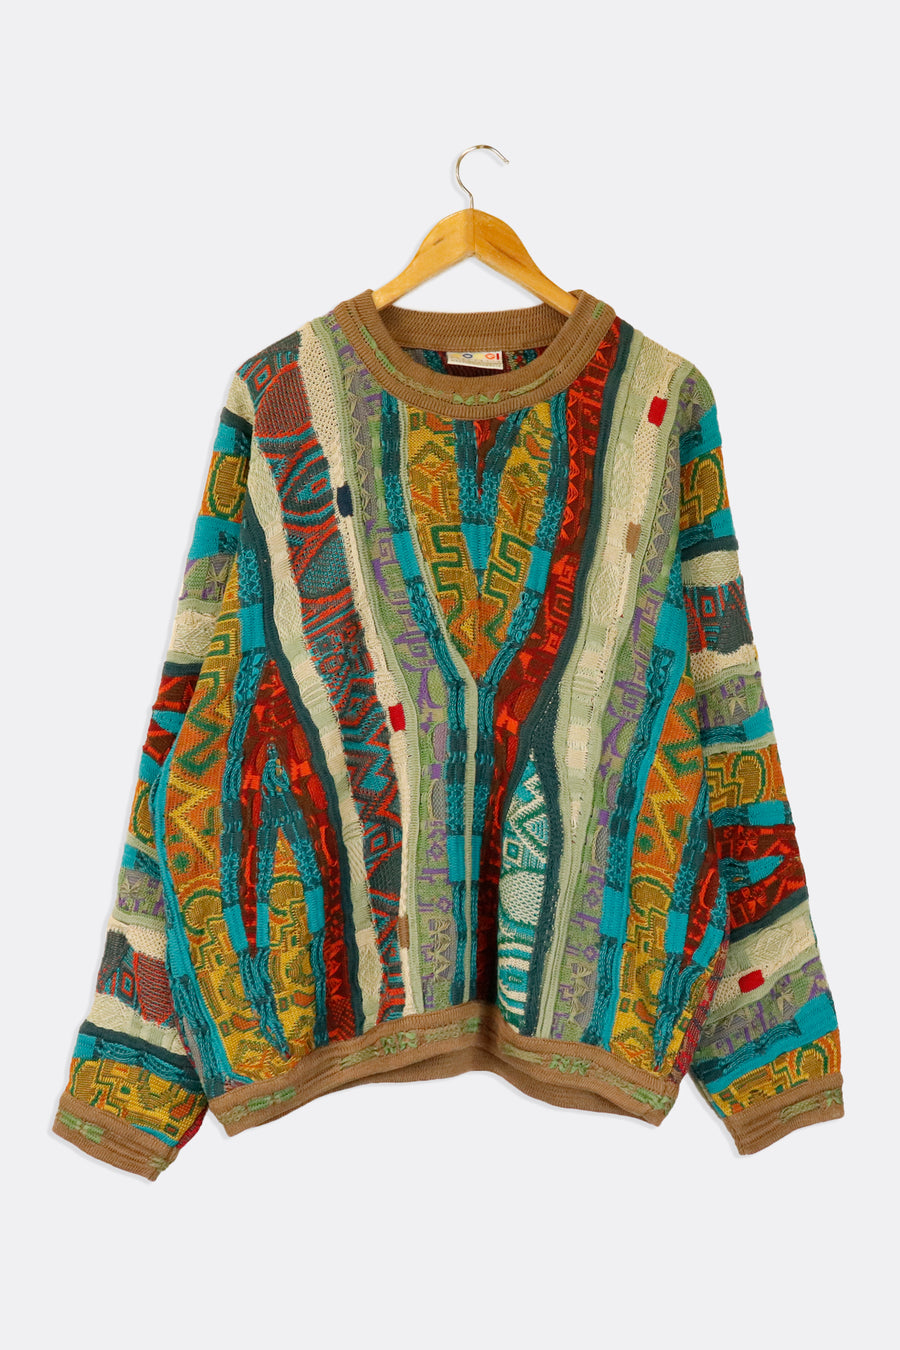 Vintage Authentic Coogi Made In Australia Multi Colored Sweatshirt Sz L